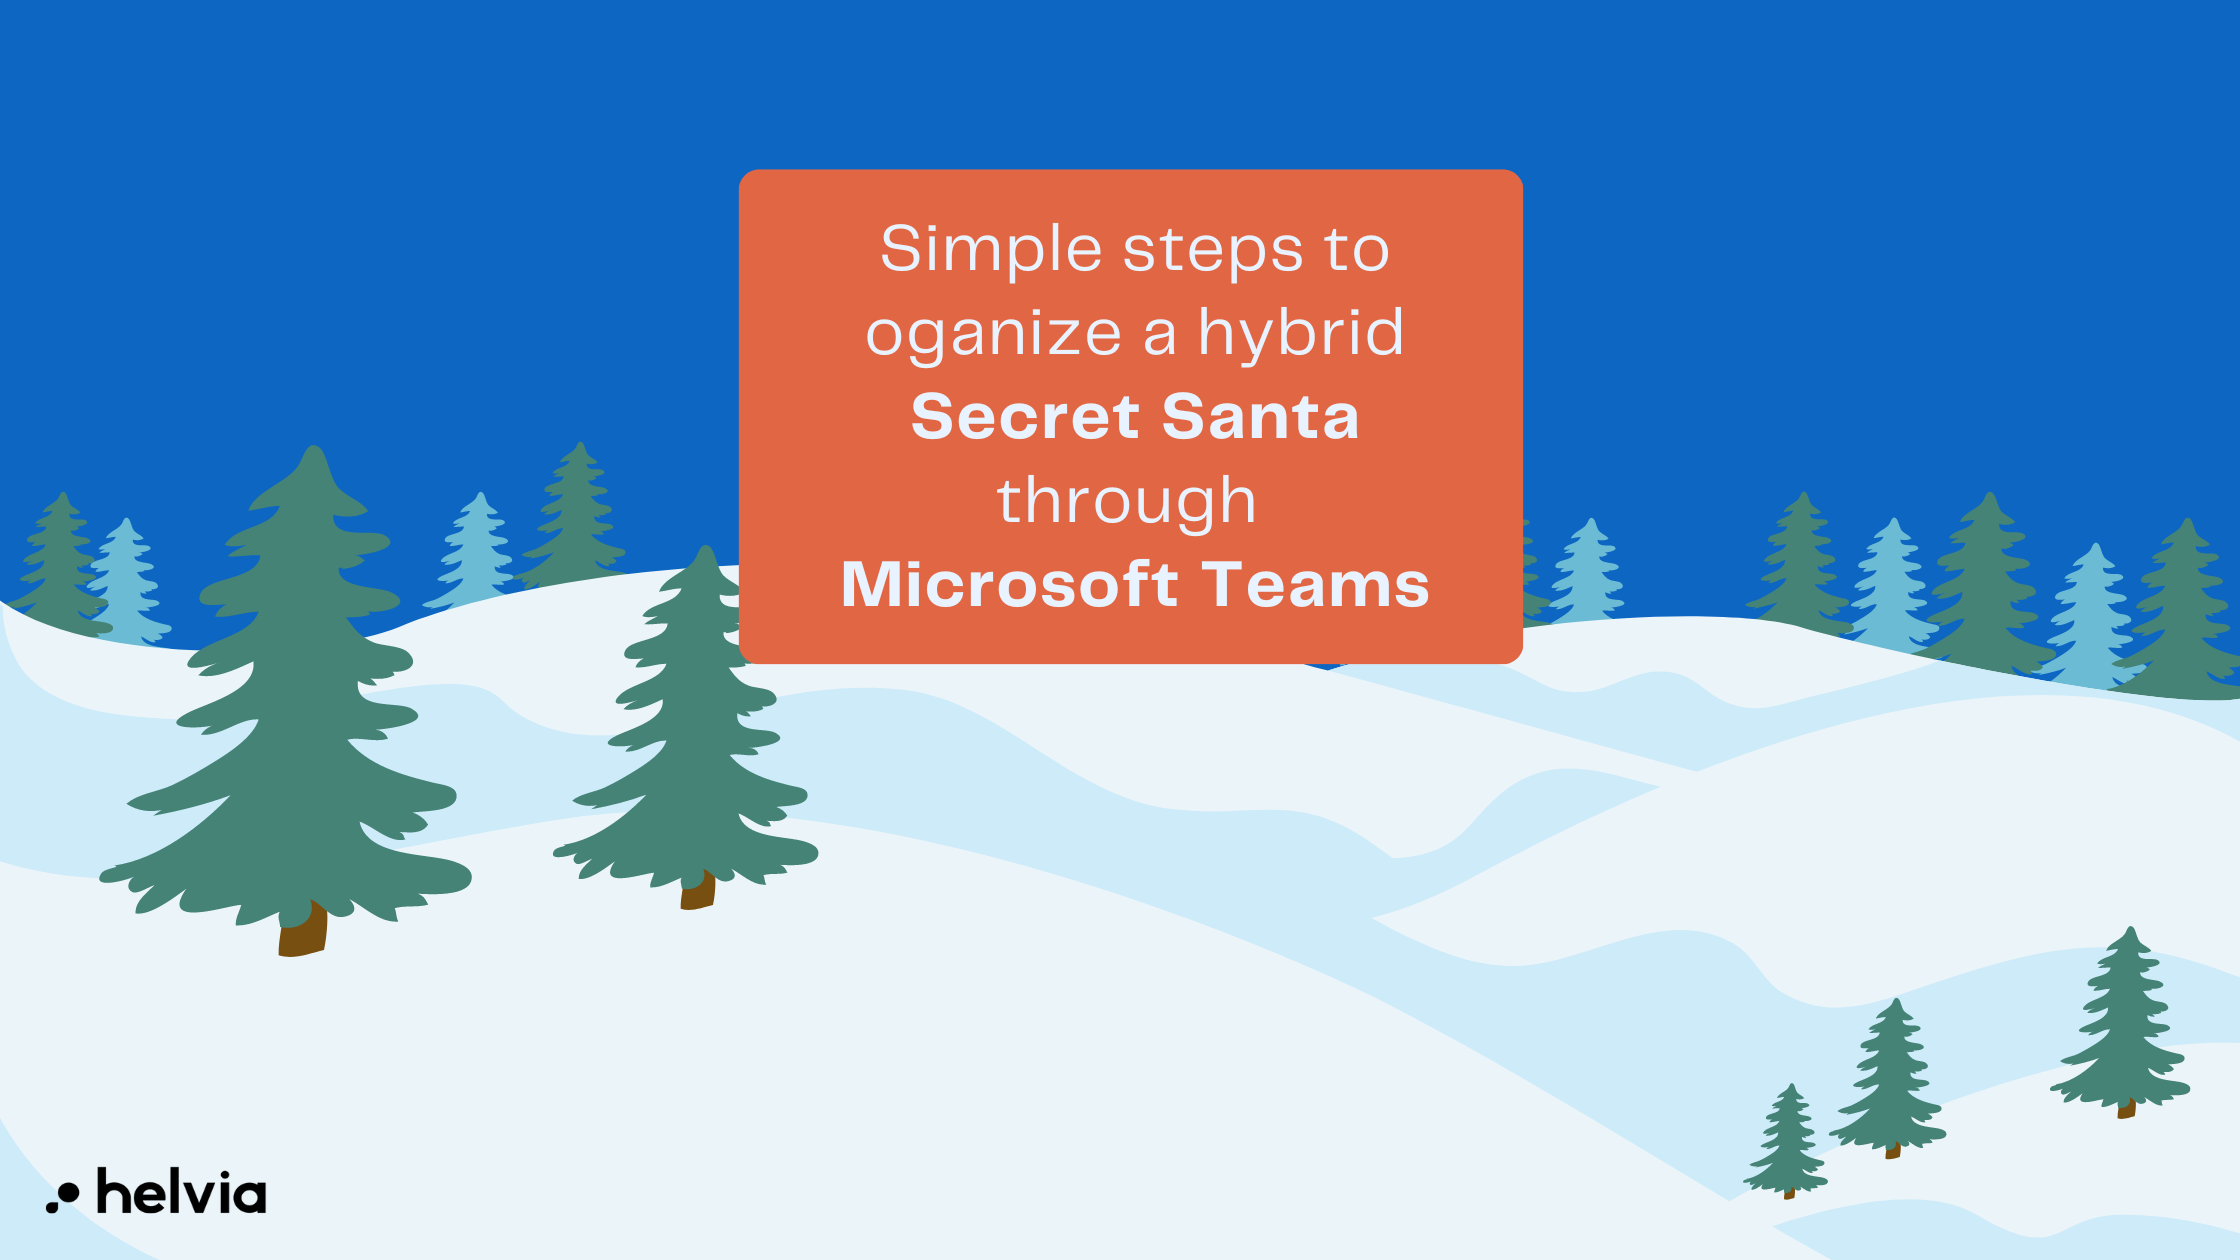 6 Simple steps to organize a Secret Santa with Microsoft Teams